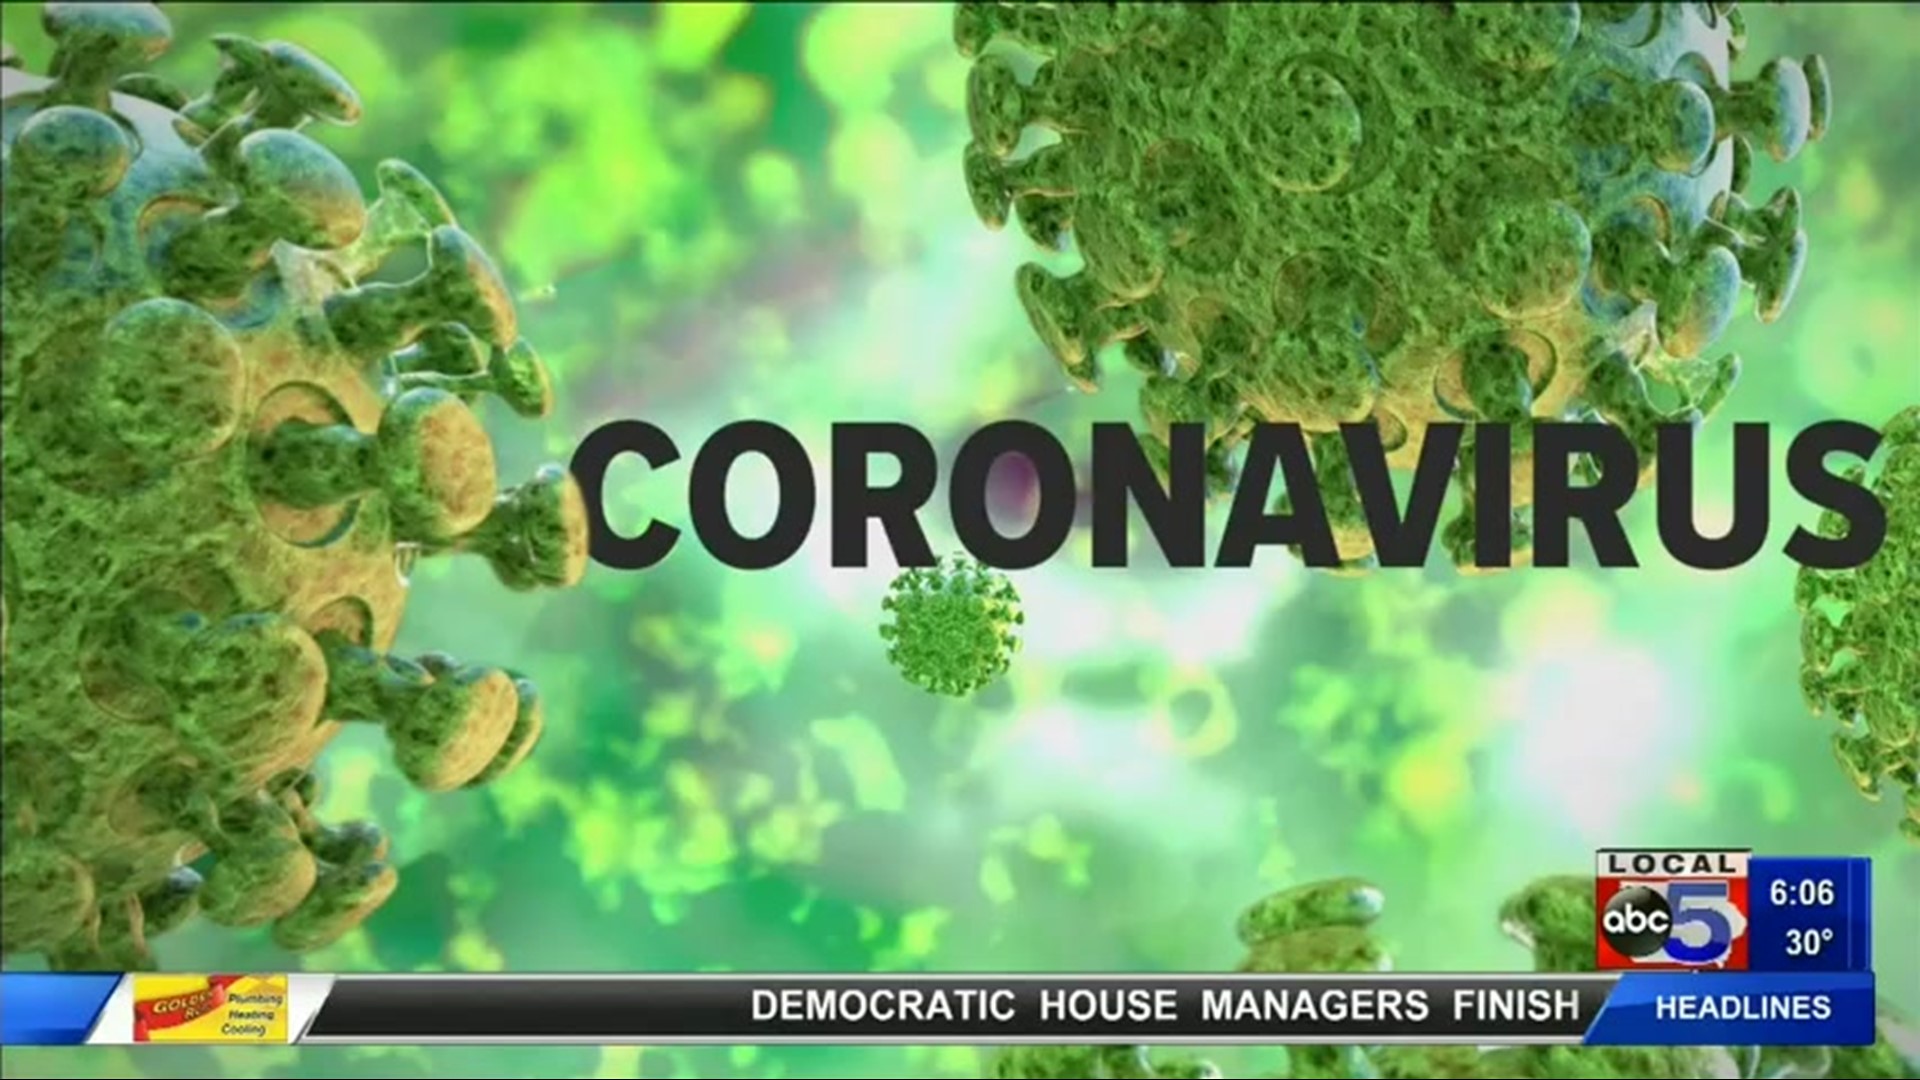 VERIFY: Headlines comparing the coronavirus to Spanish flu are missing context